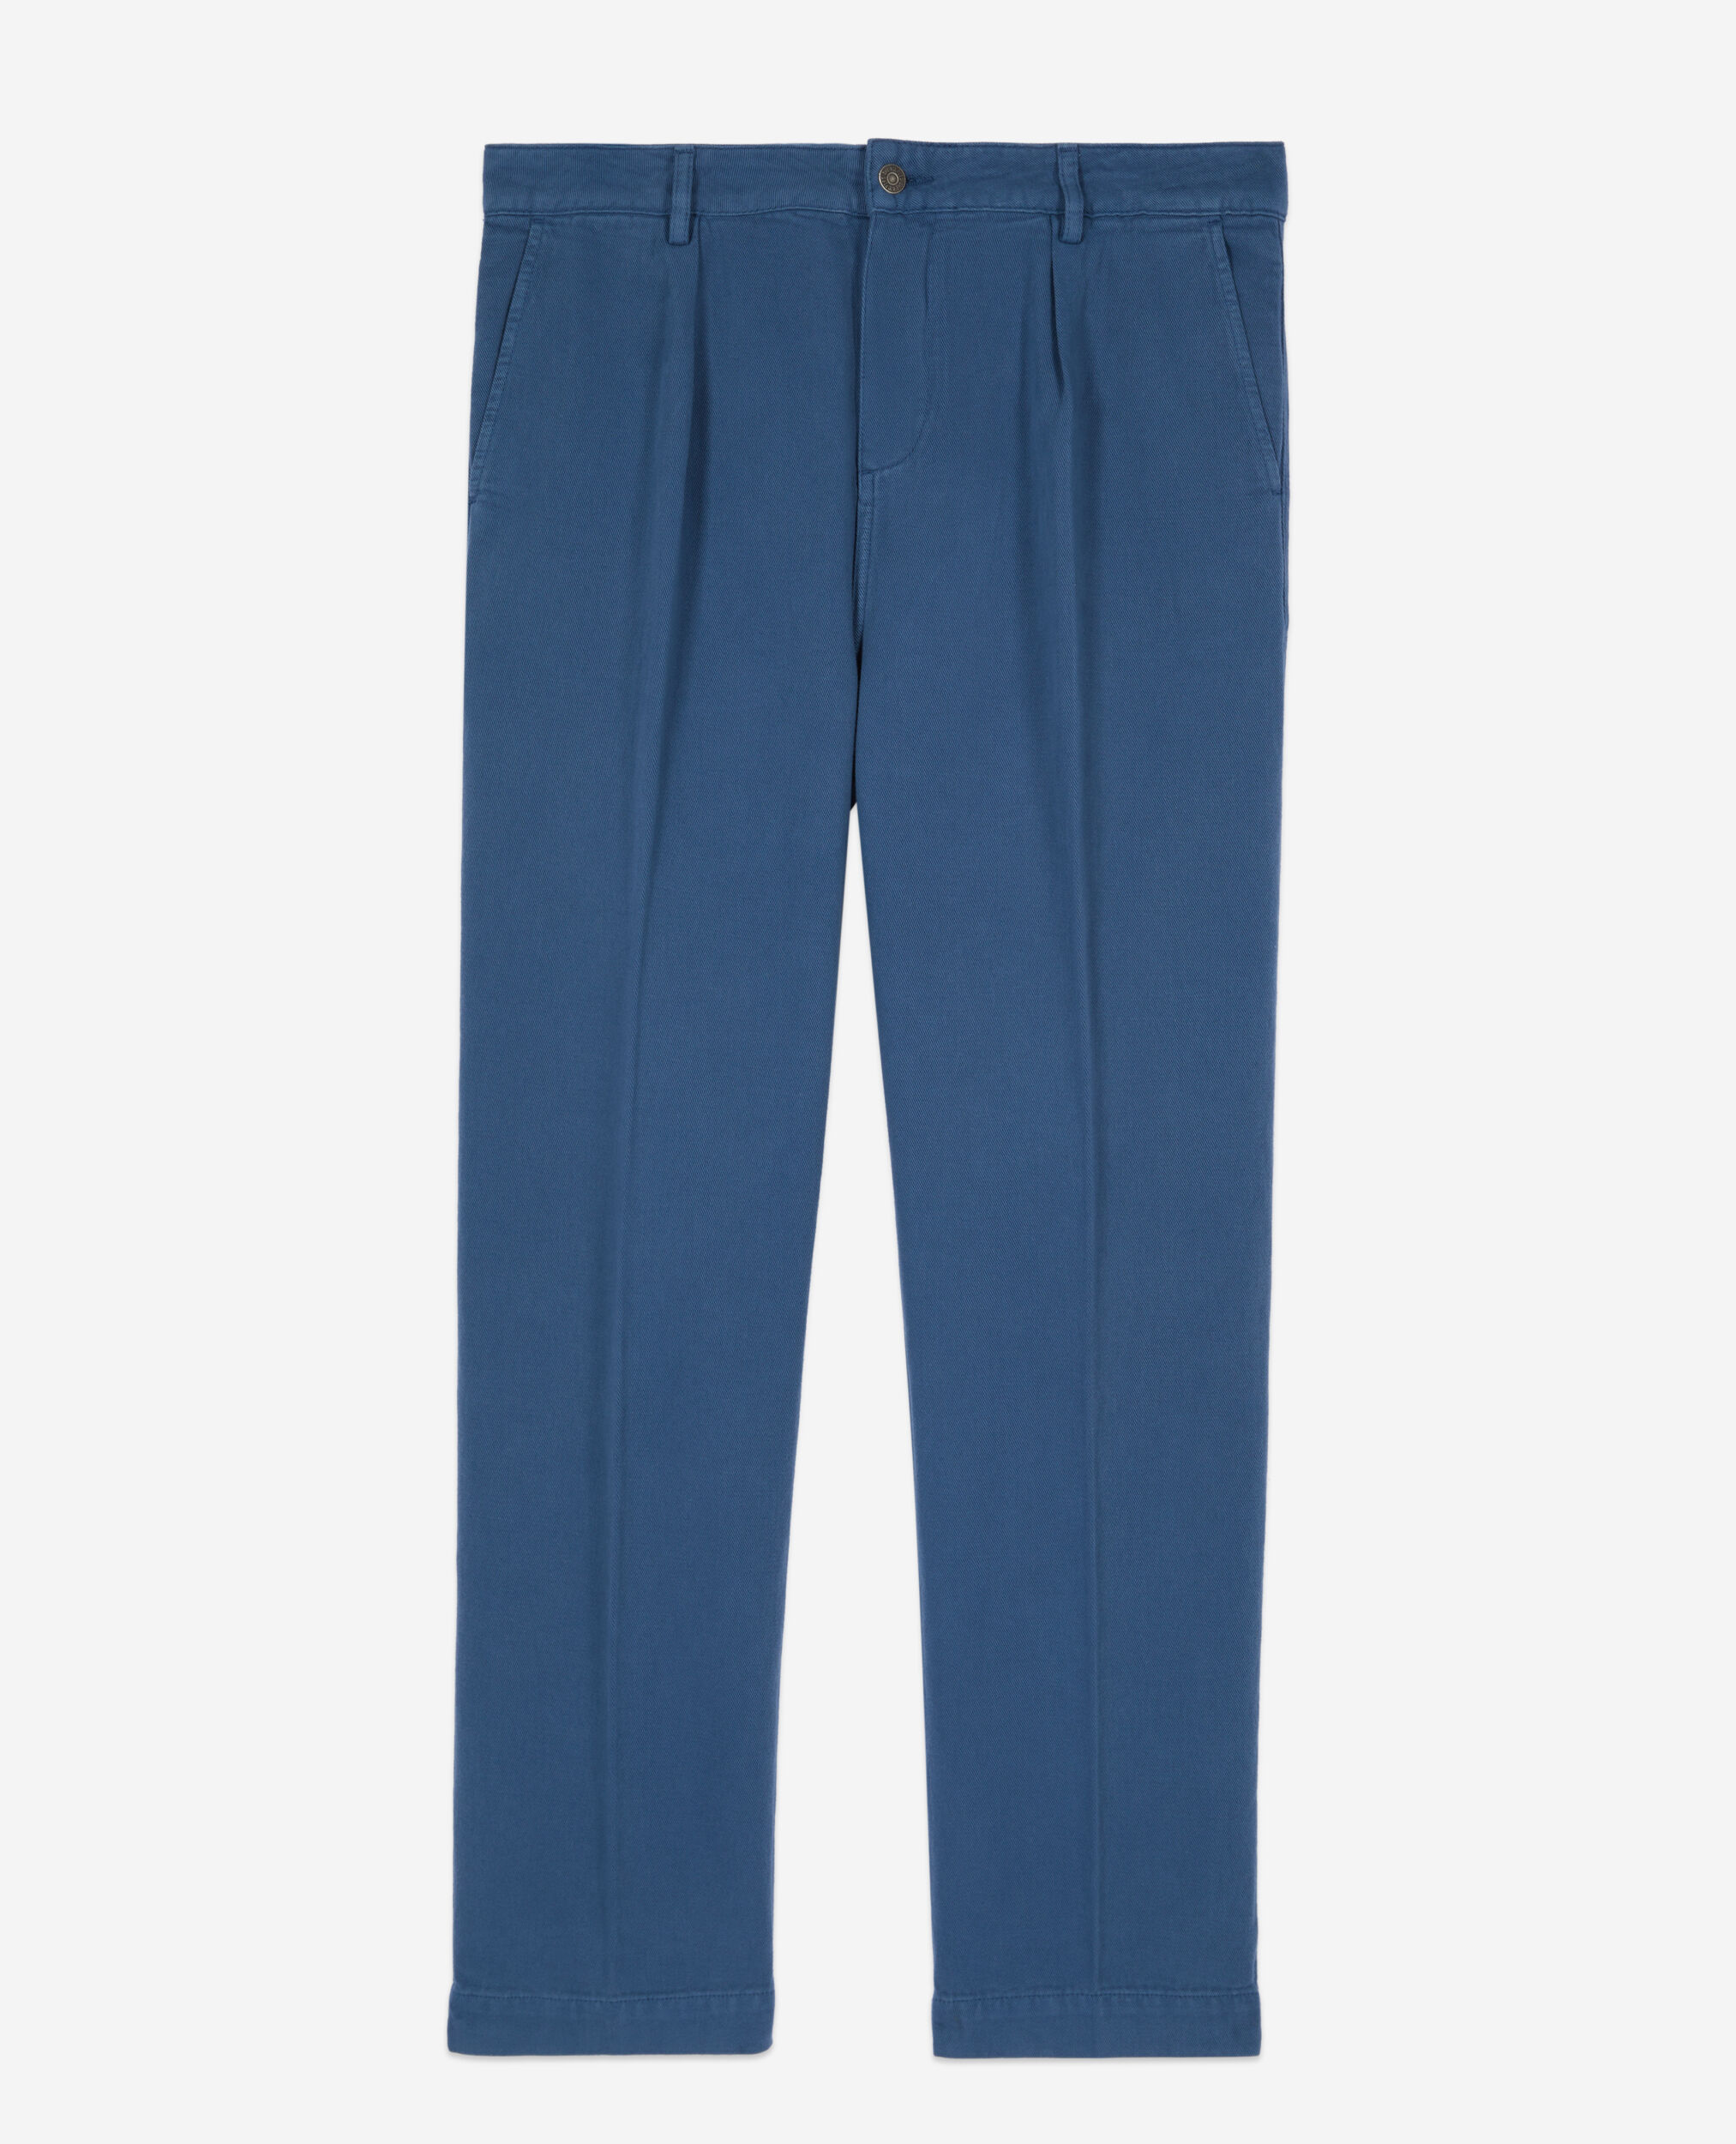 Pantalón azul marino algodón lino pinzas, MIDDLE NAVY, hi-res image number null